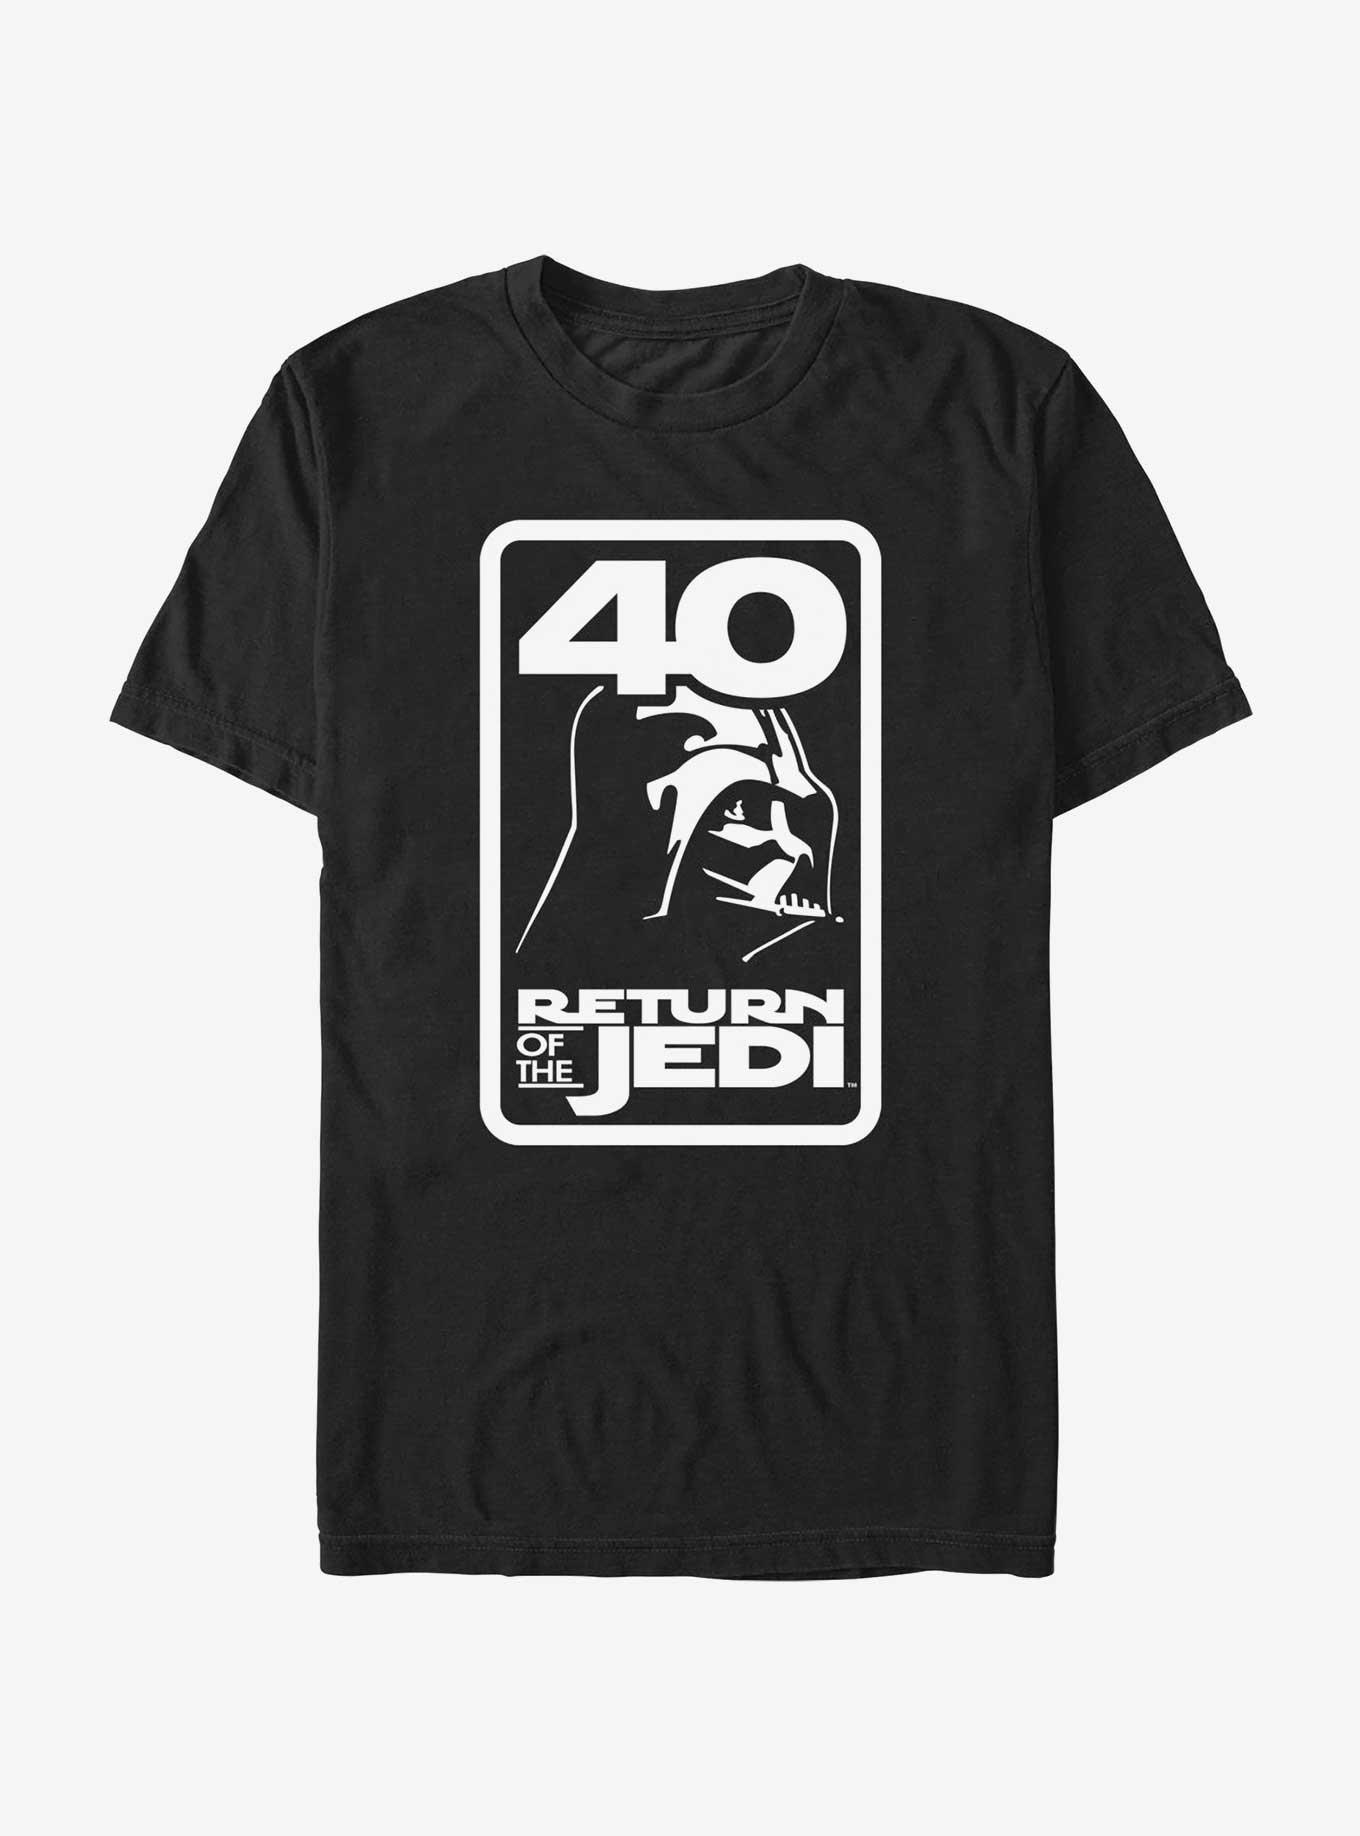 Star Wars Return of the Jedi 40th Anniversary Vader Badge T-Shirt